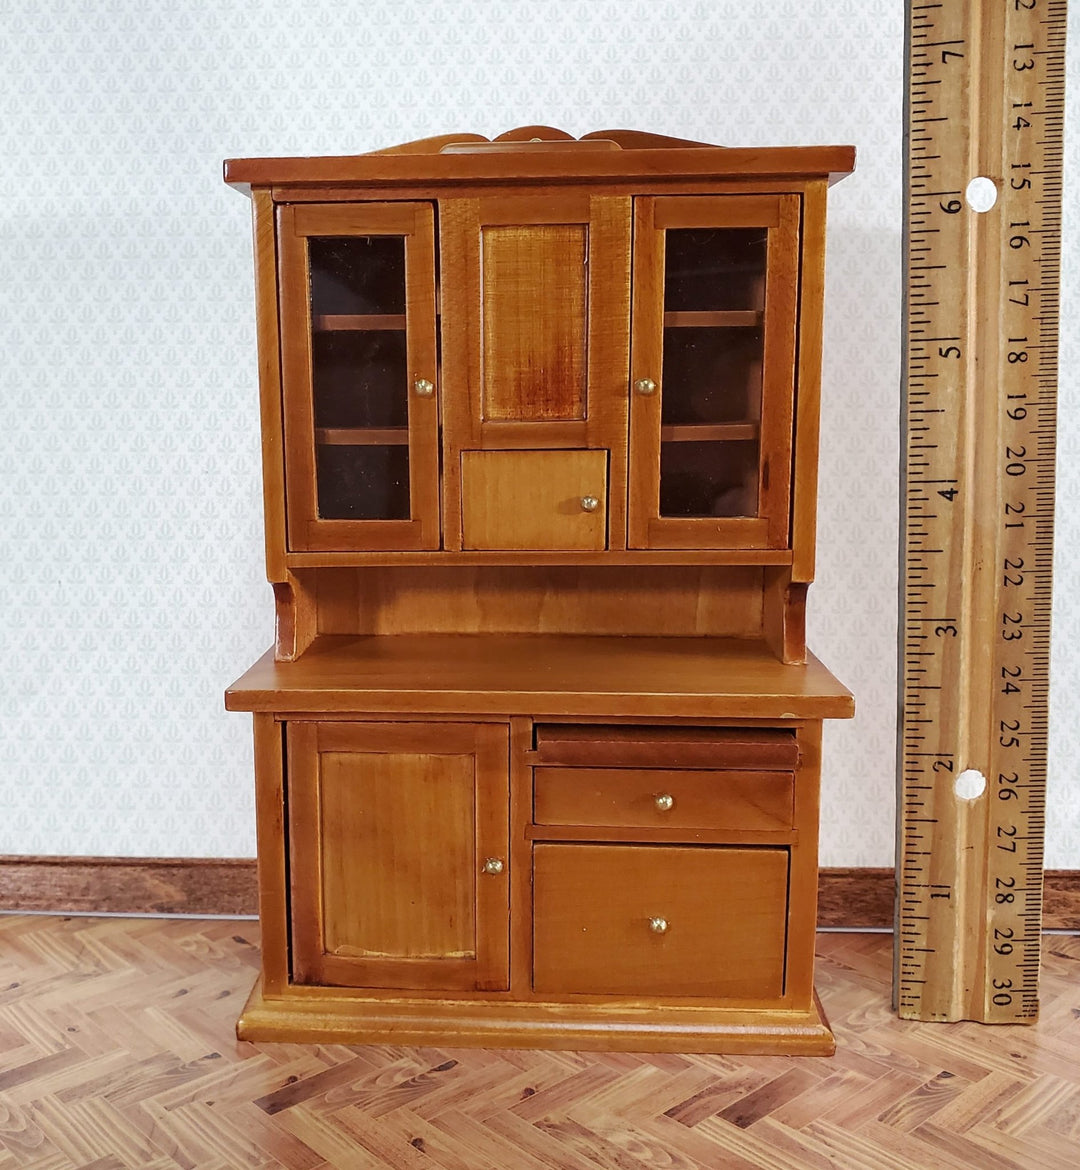 Dollhouse Kitchen Cabinet w/ Flour Bin 1:12 Scale Miniature Furniture Walnut Finish - Miniature Crush